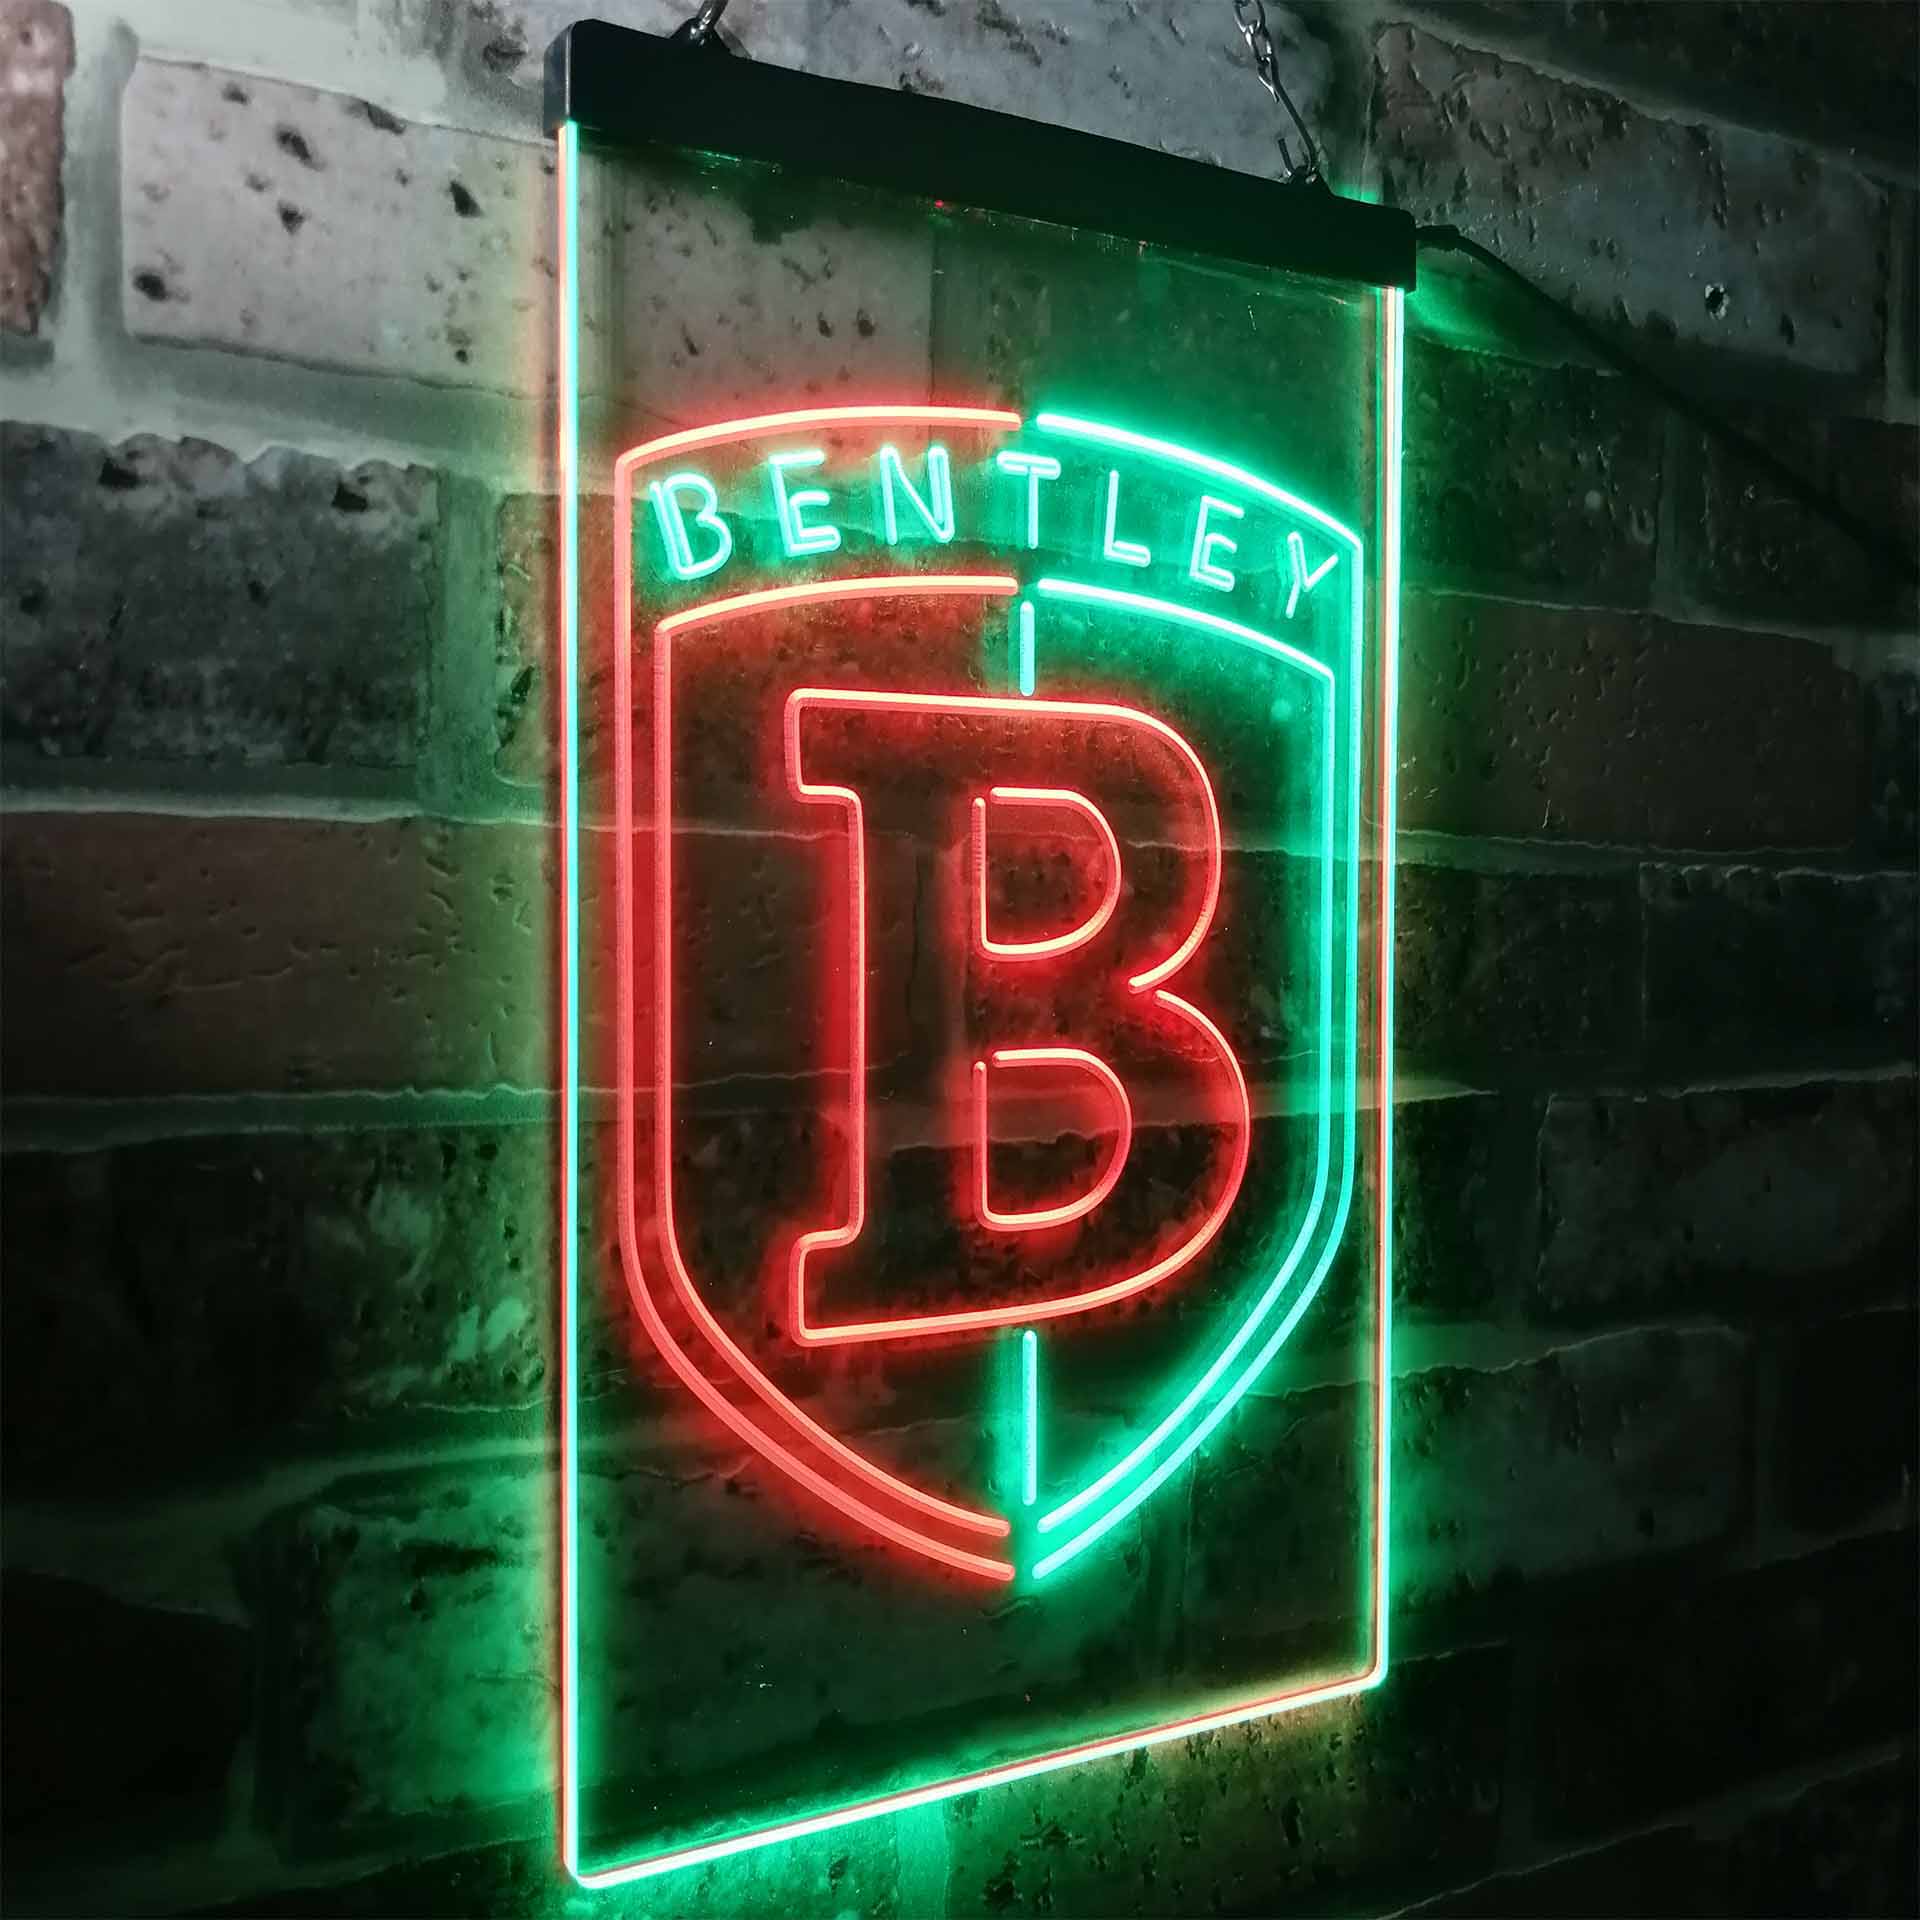 Bentley Car LED Neon Sign